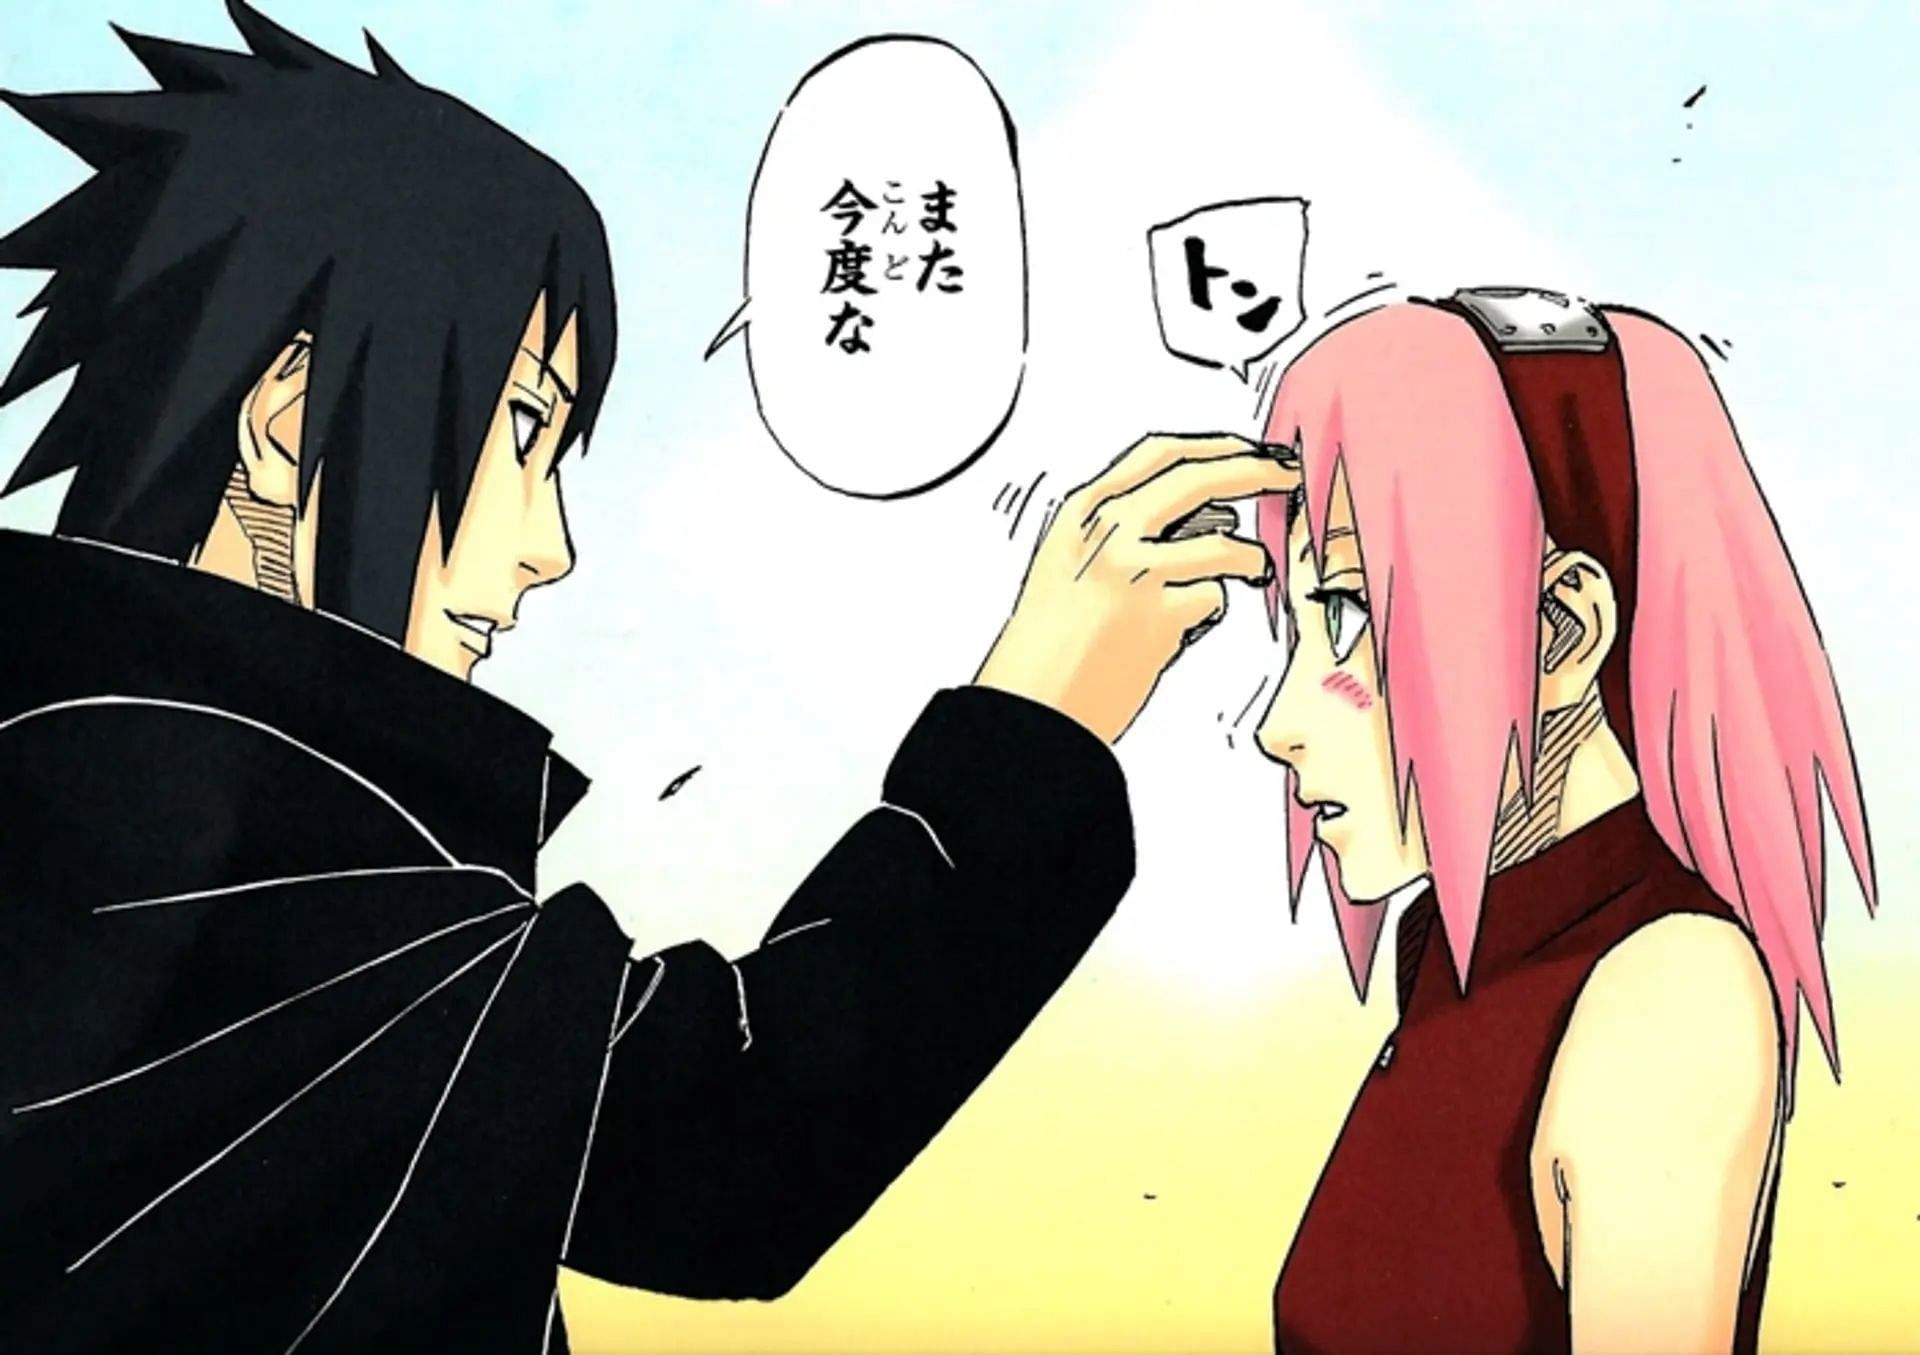 Sasuke taps Sakura on the forehead affectionately (Image via Shueisha)